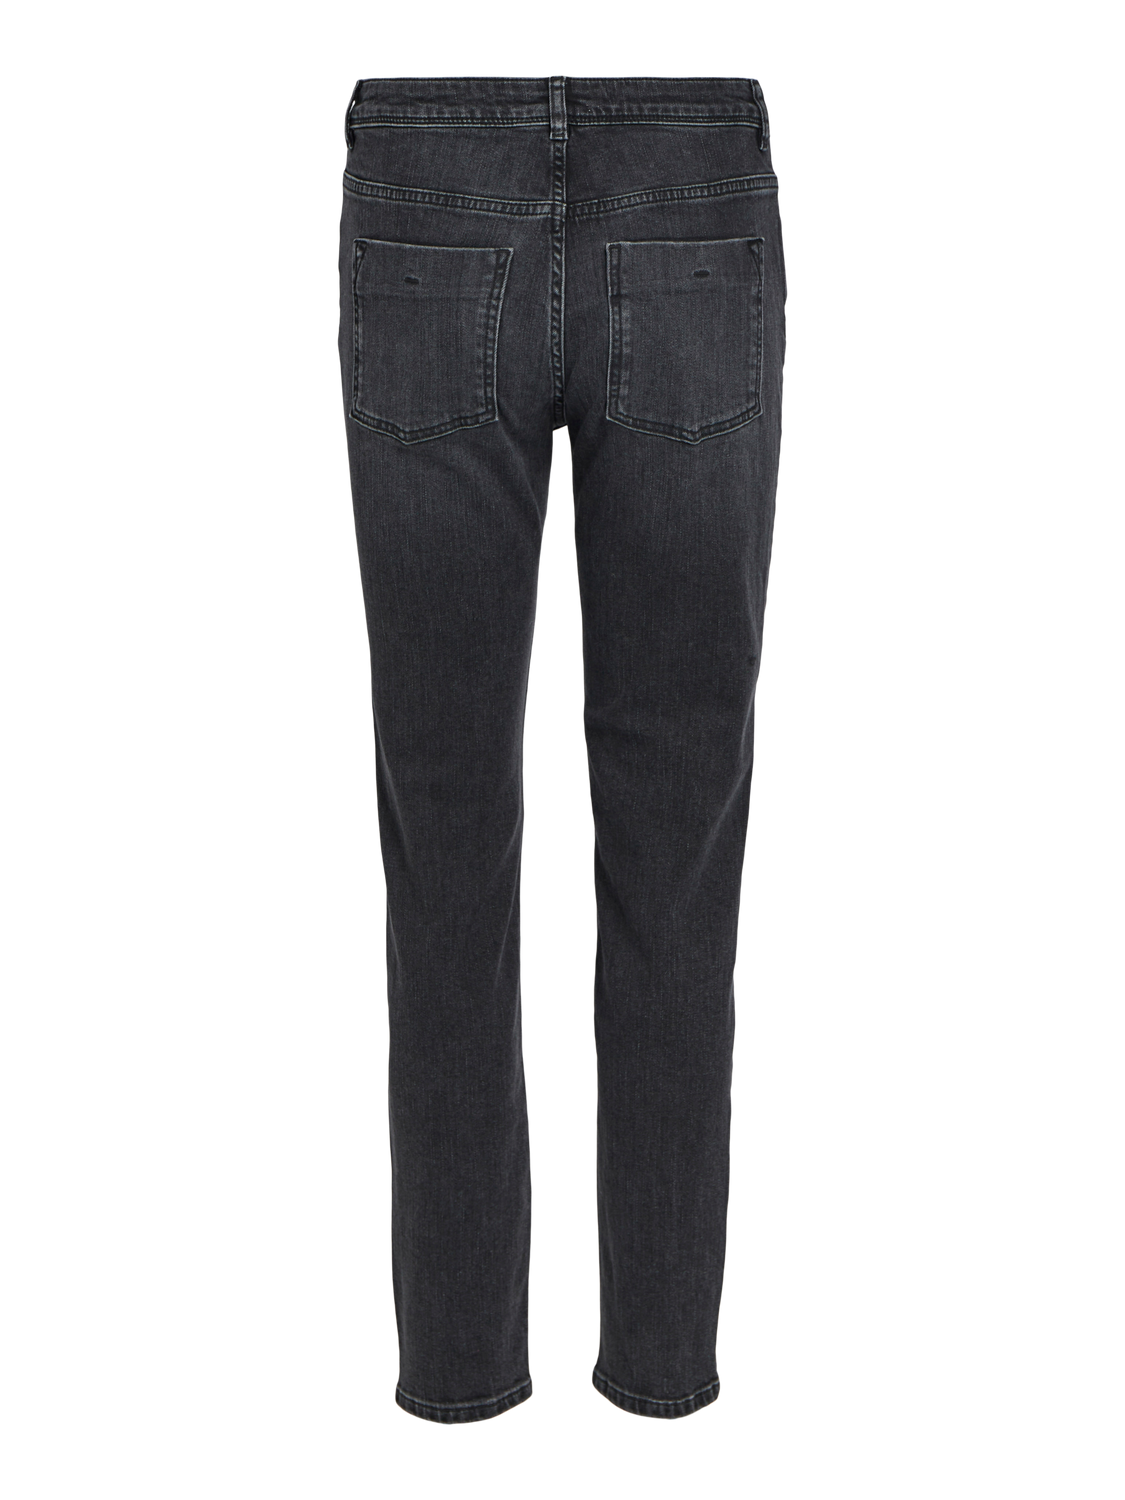 OBJNAIA Jeans - Black Denim